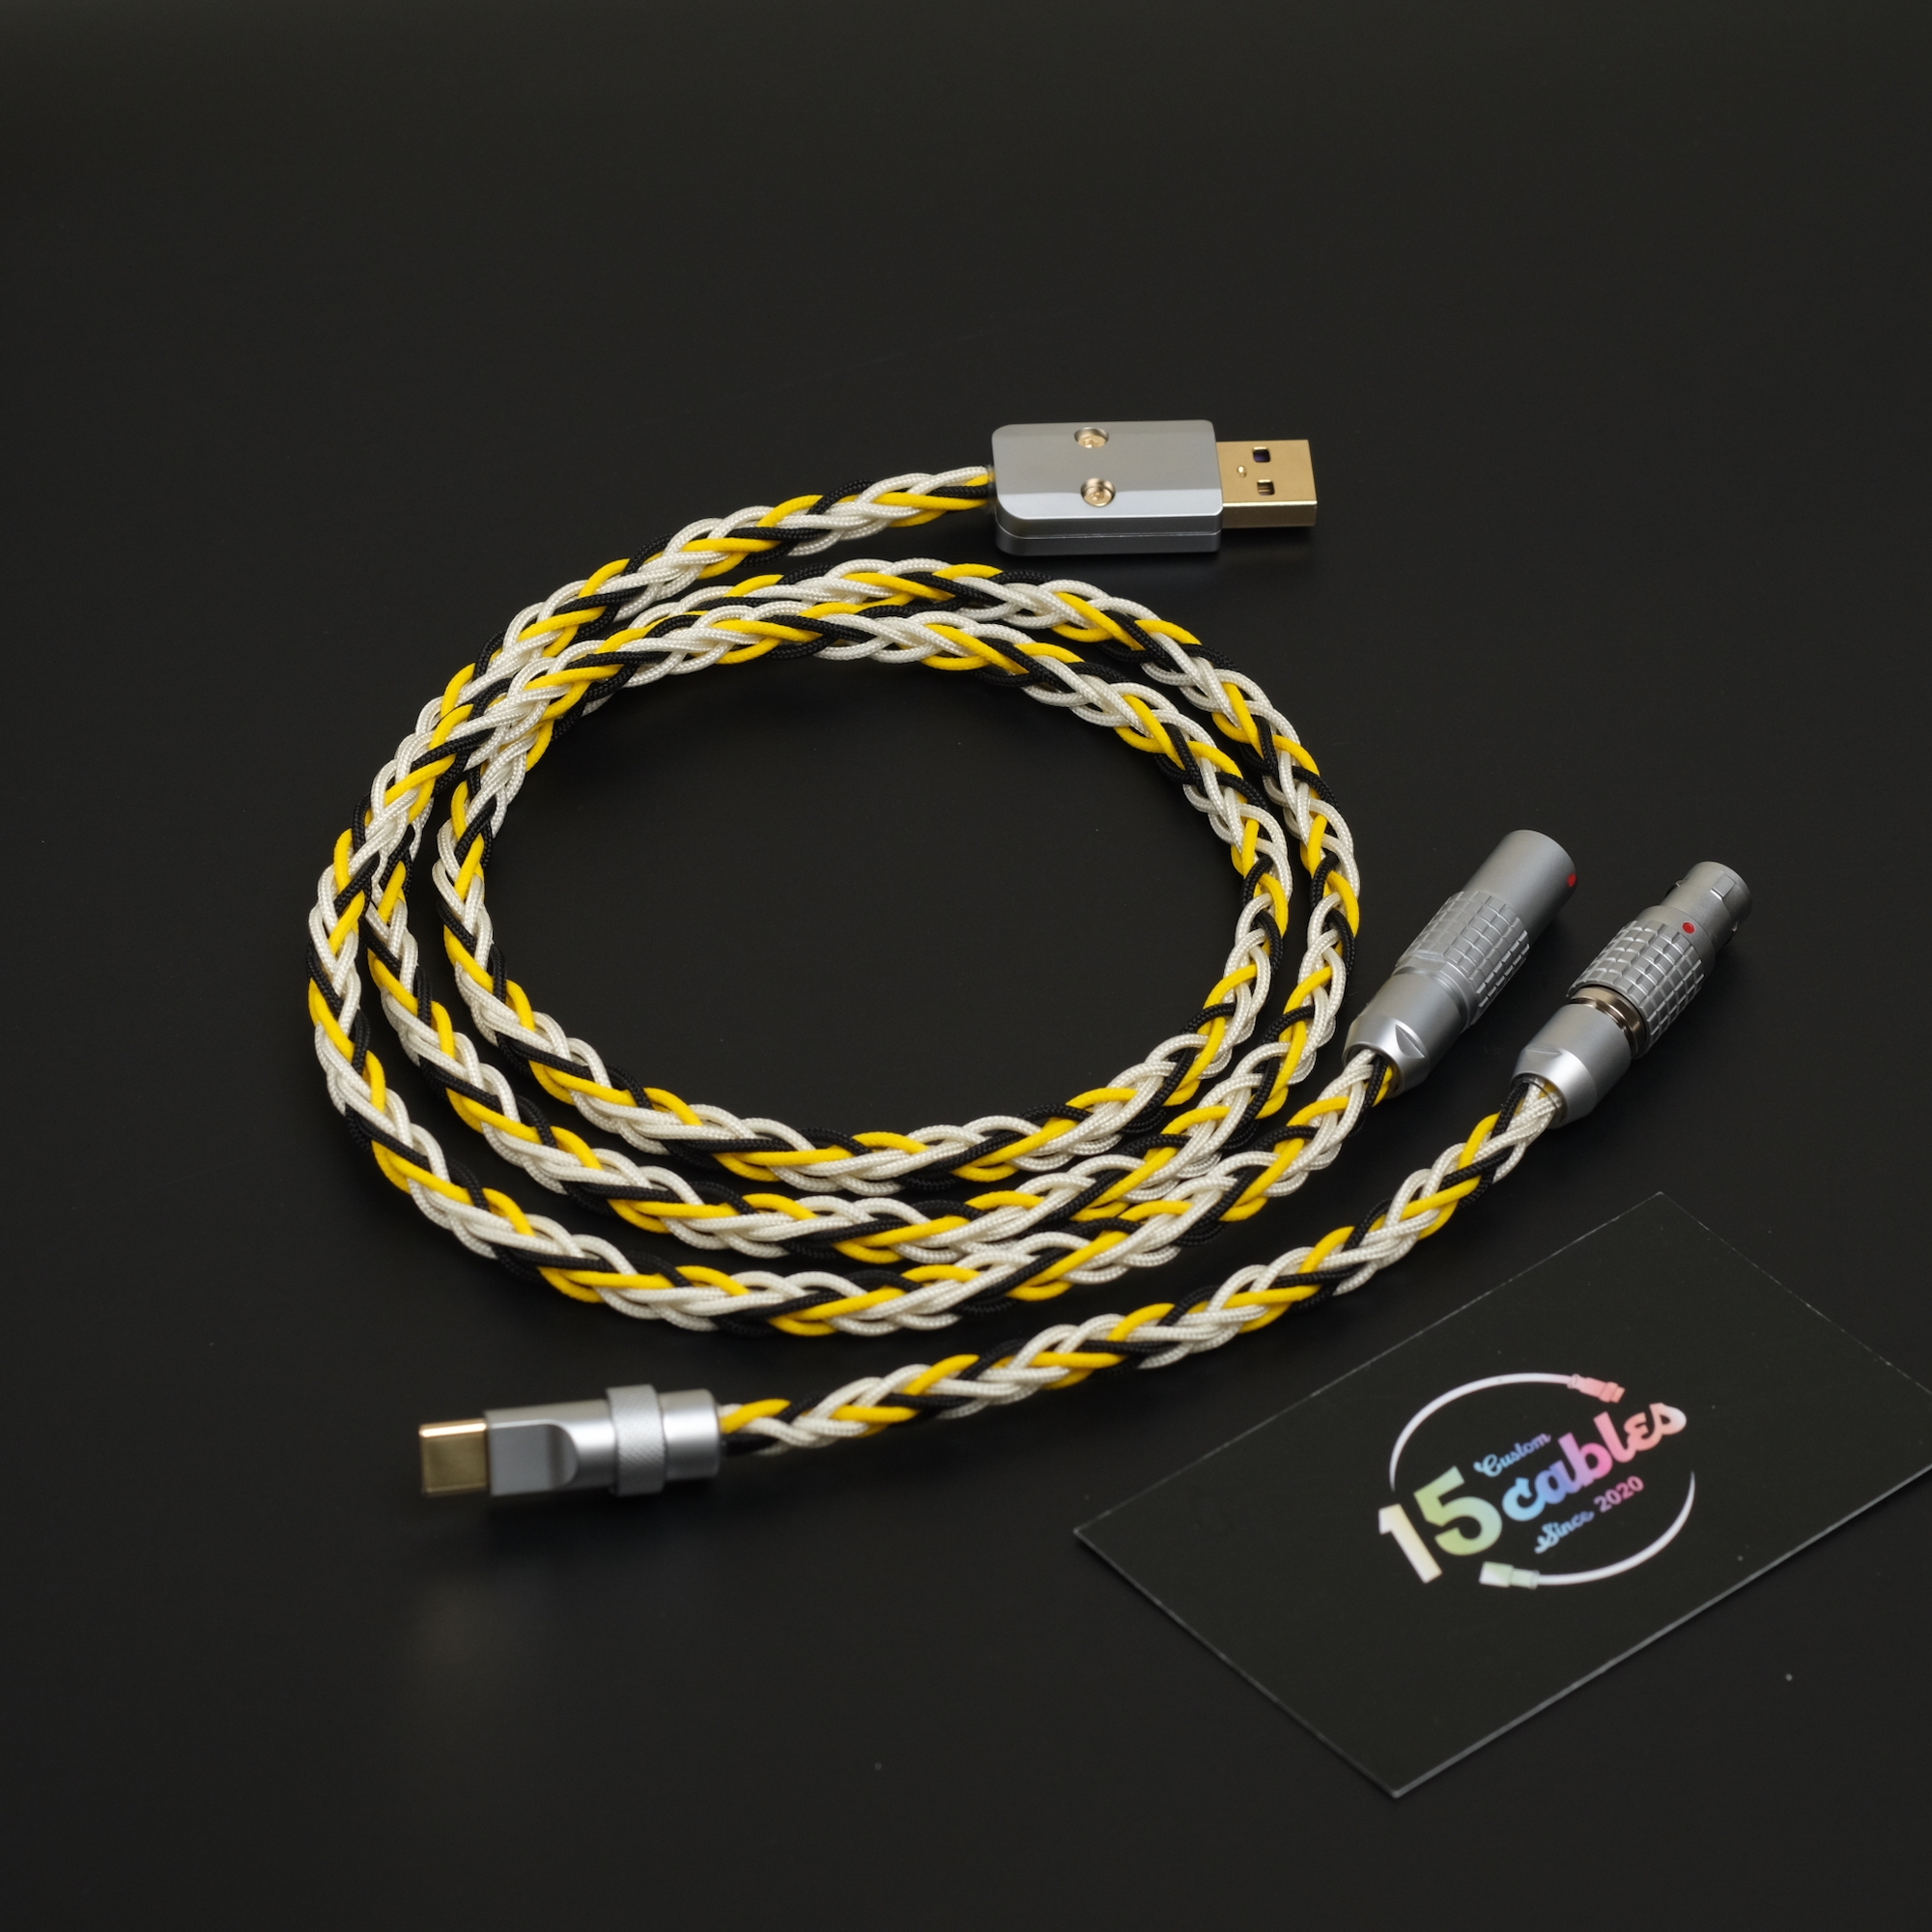 Pro Co SPDS-15 Premium Canare SPDIF Cable - 15 foot